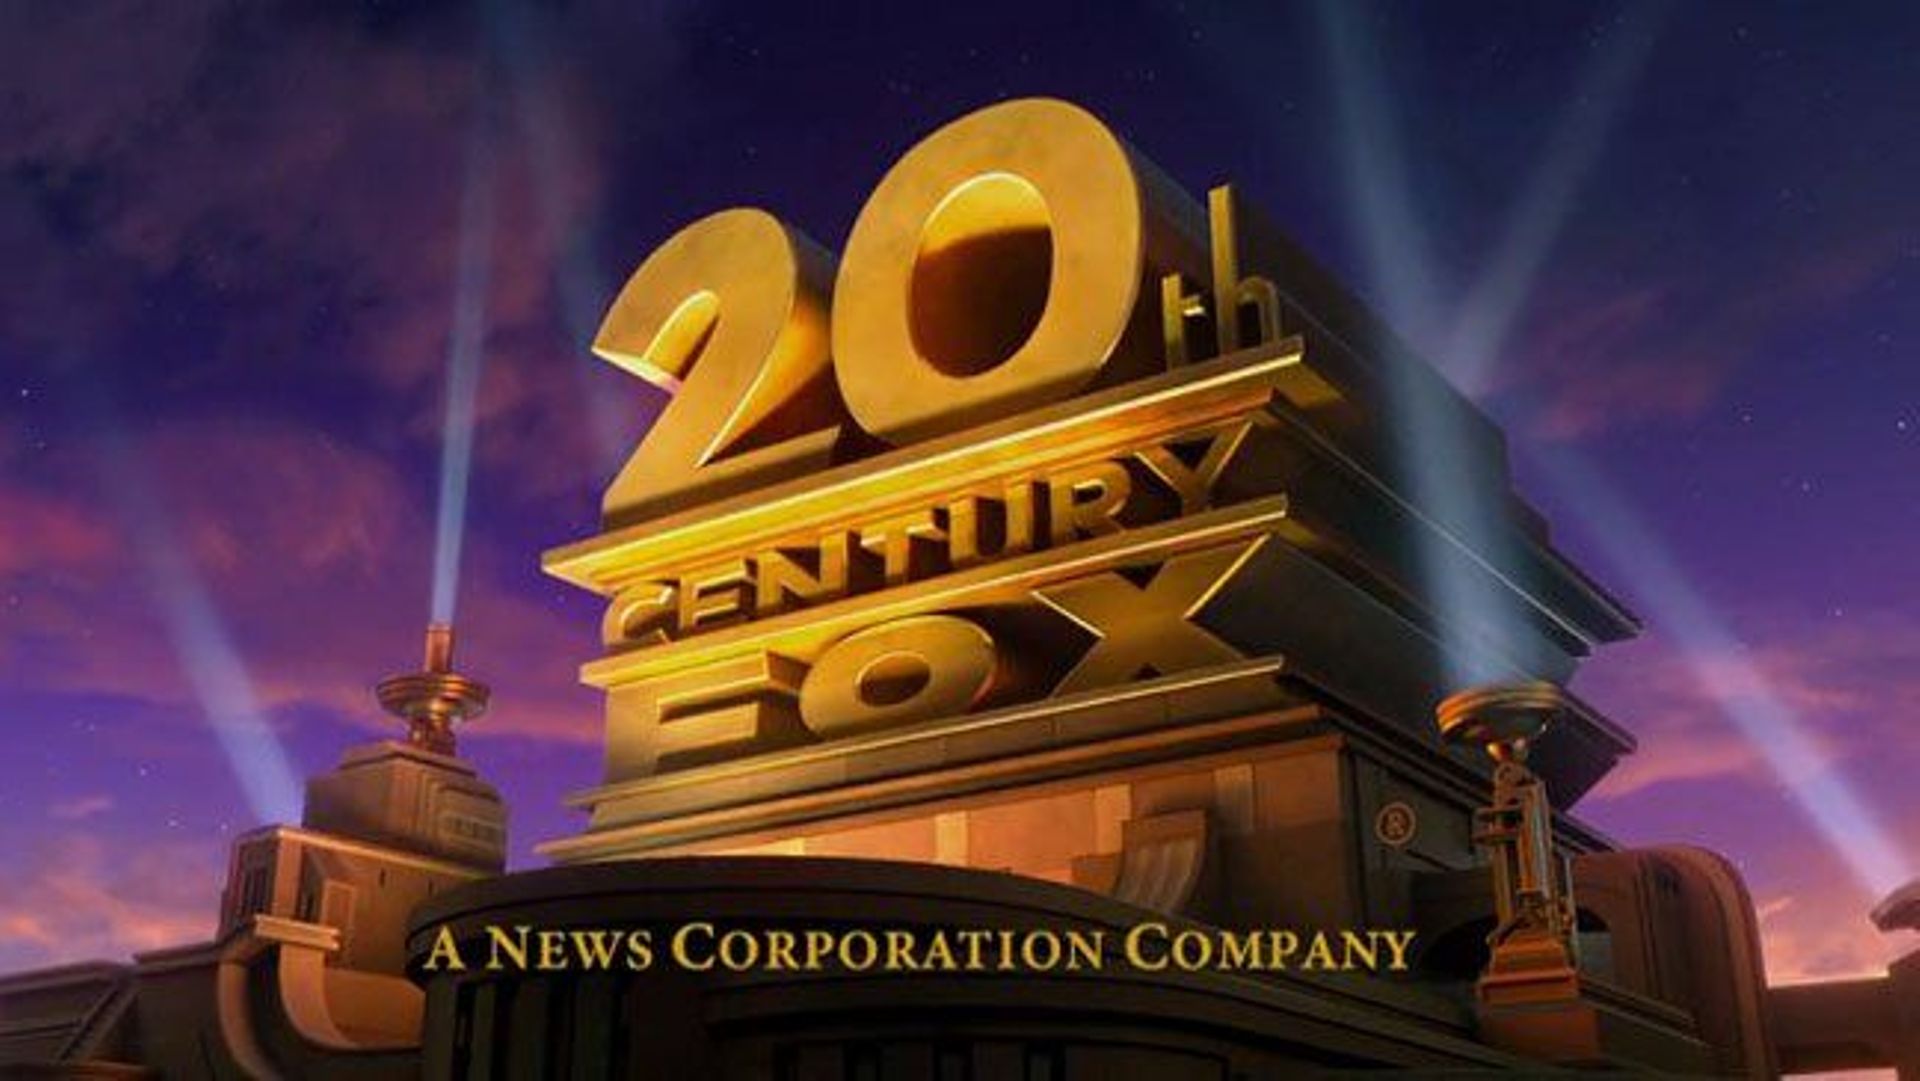 Le studio 20th Century Fox va perdre une partie de son nom et devenir 20th Century Studios.